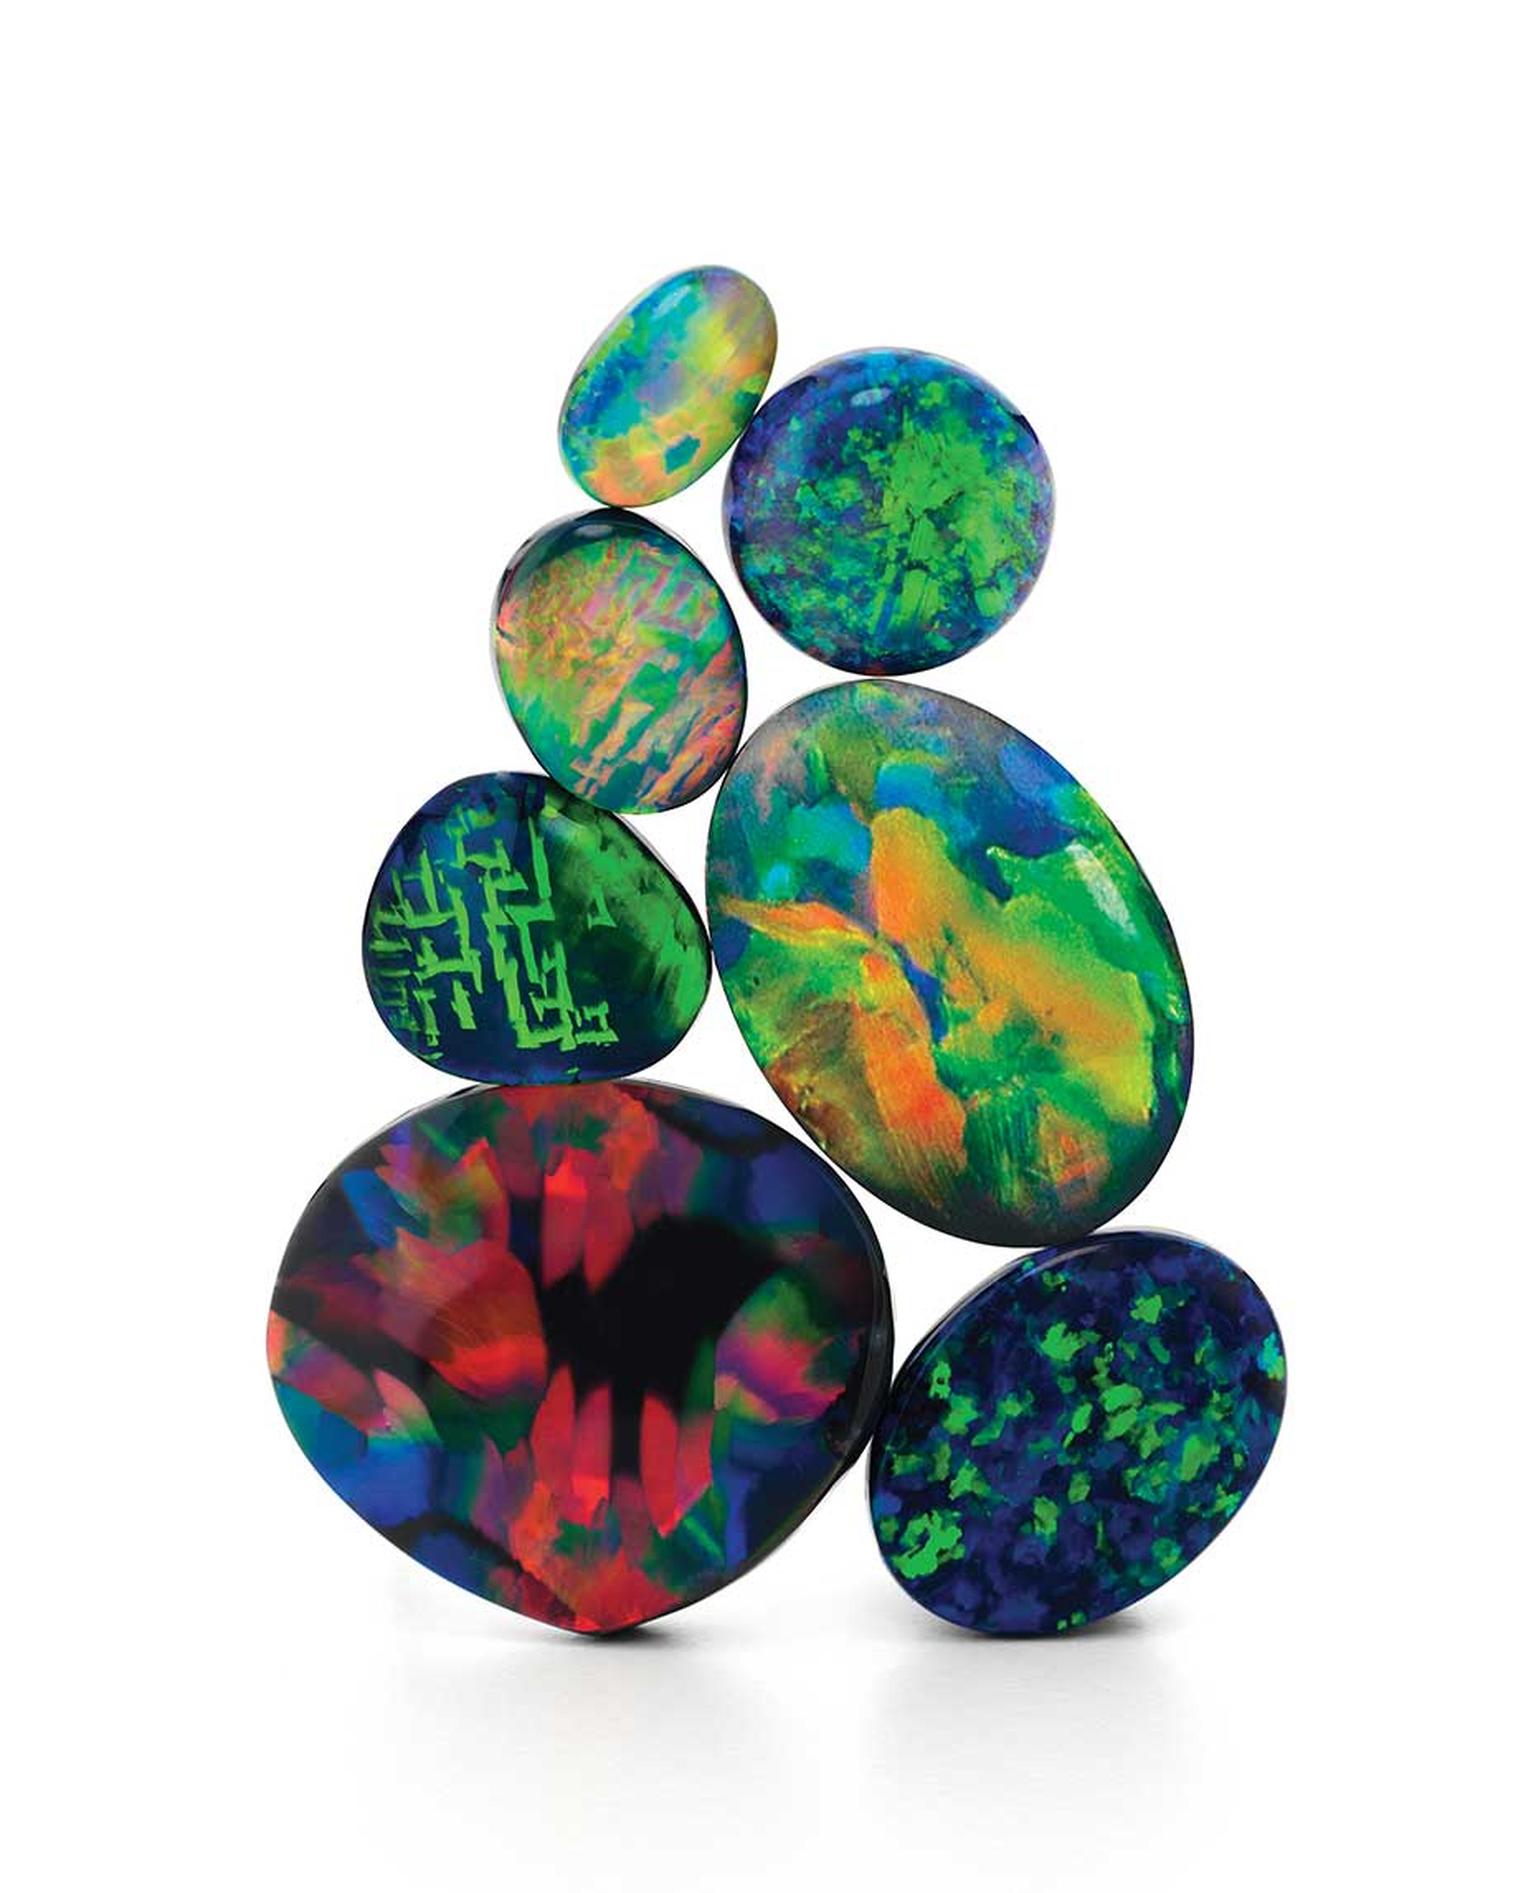 Black opal jewellery: the rainbow stone from Australia shows its dark side